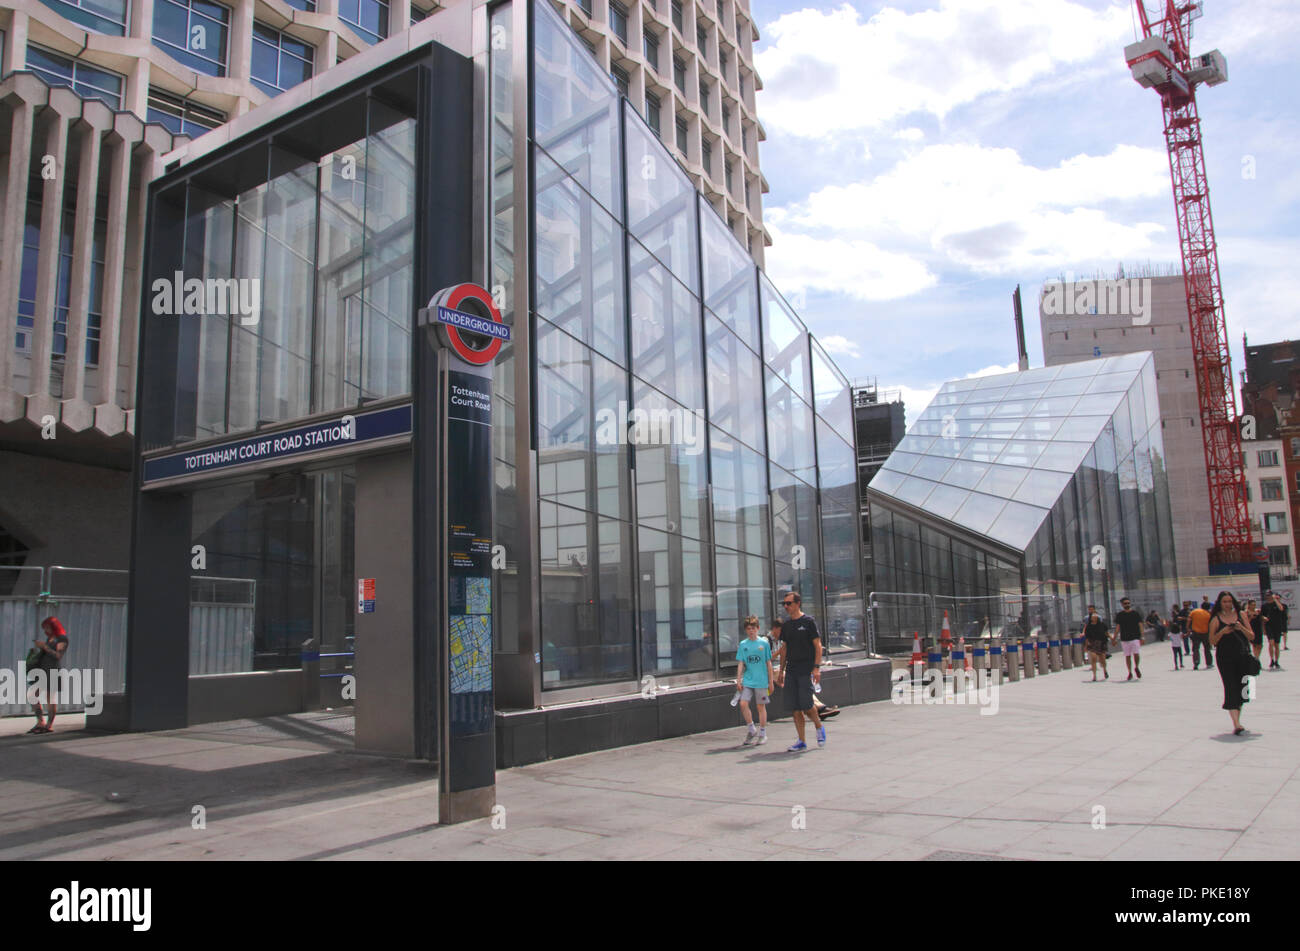 Entrance to new Tottenham Court Road Station London 2018 Stock Photo